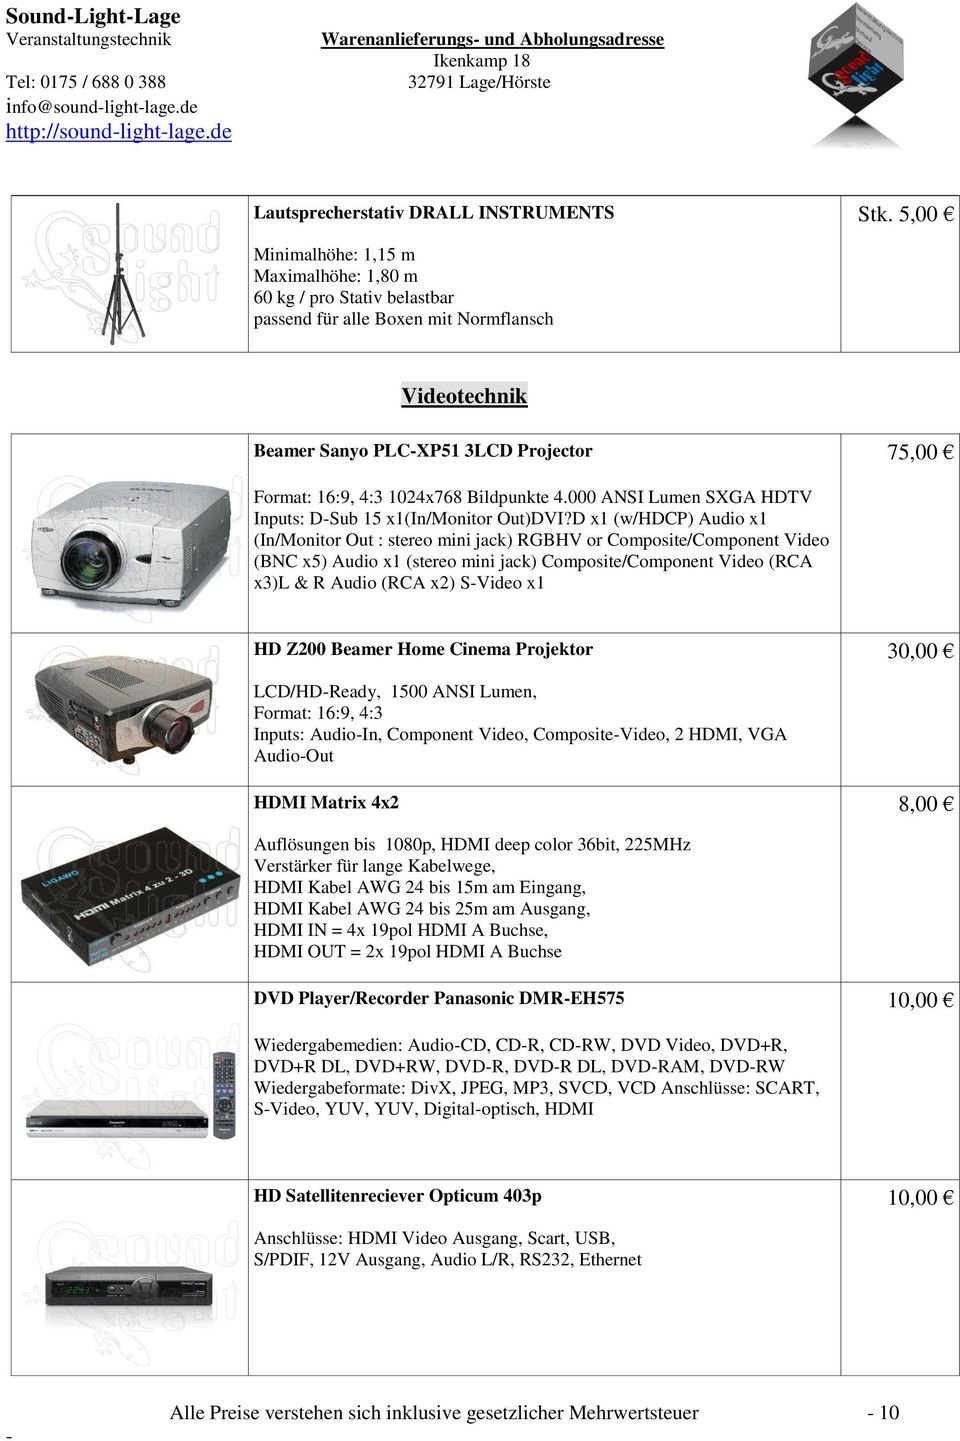 Bildpunkte 4.000 ANSI Lumen SXGA HDTV Inputs: DSub 15 x1(in/monitor Out)DVI?